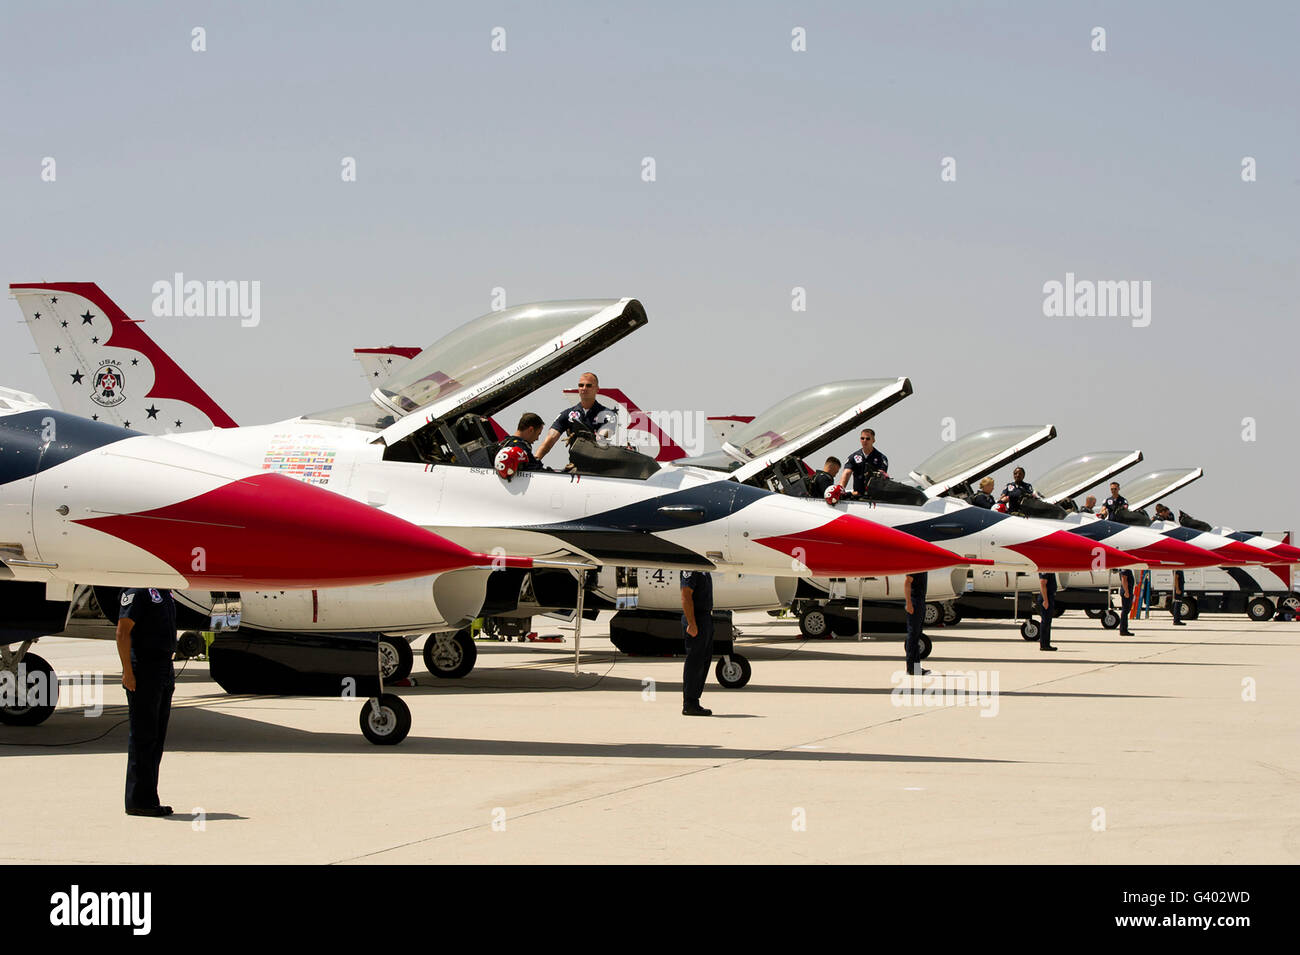 Airmen conduct preflight preparations on F-16 Thunderbirds. Stock Photo